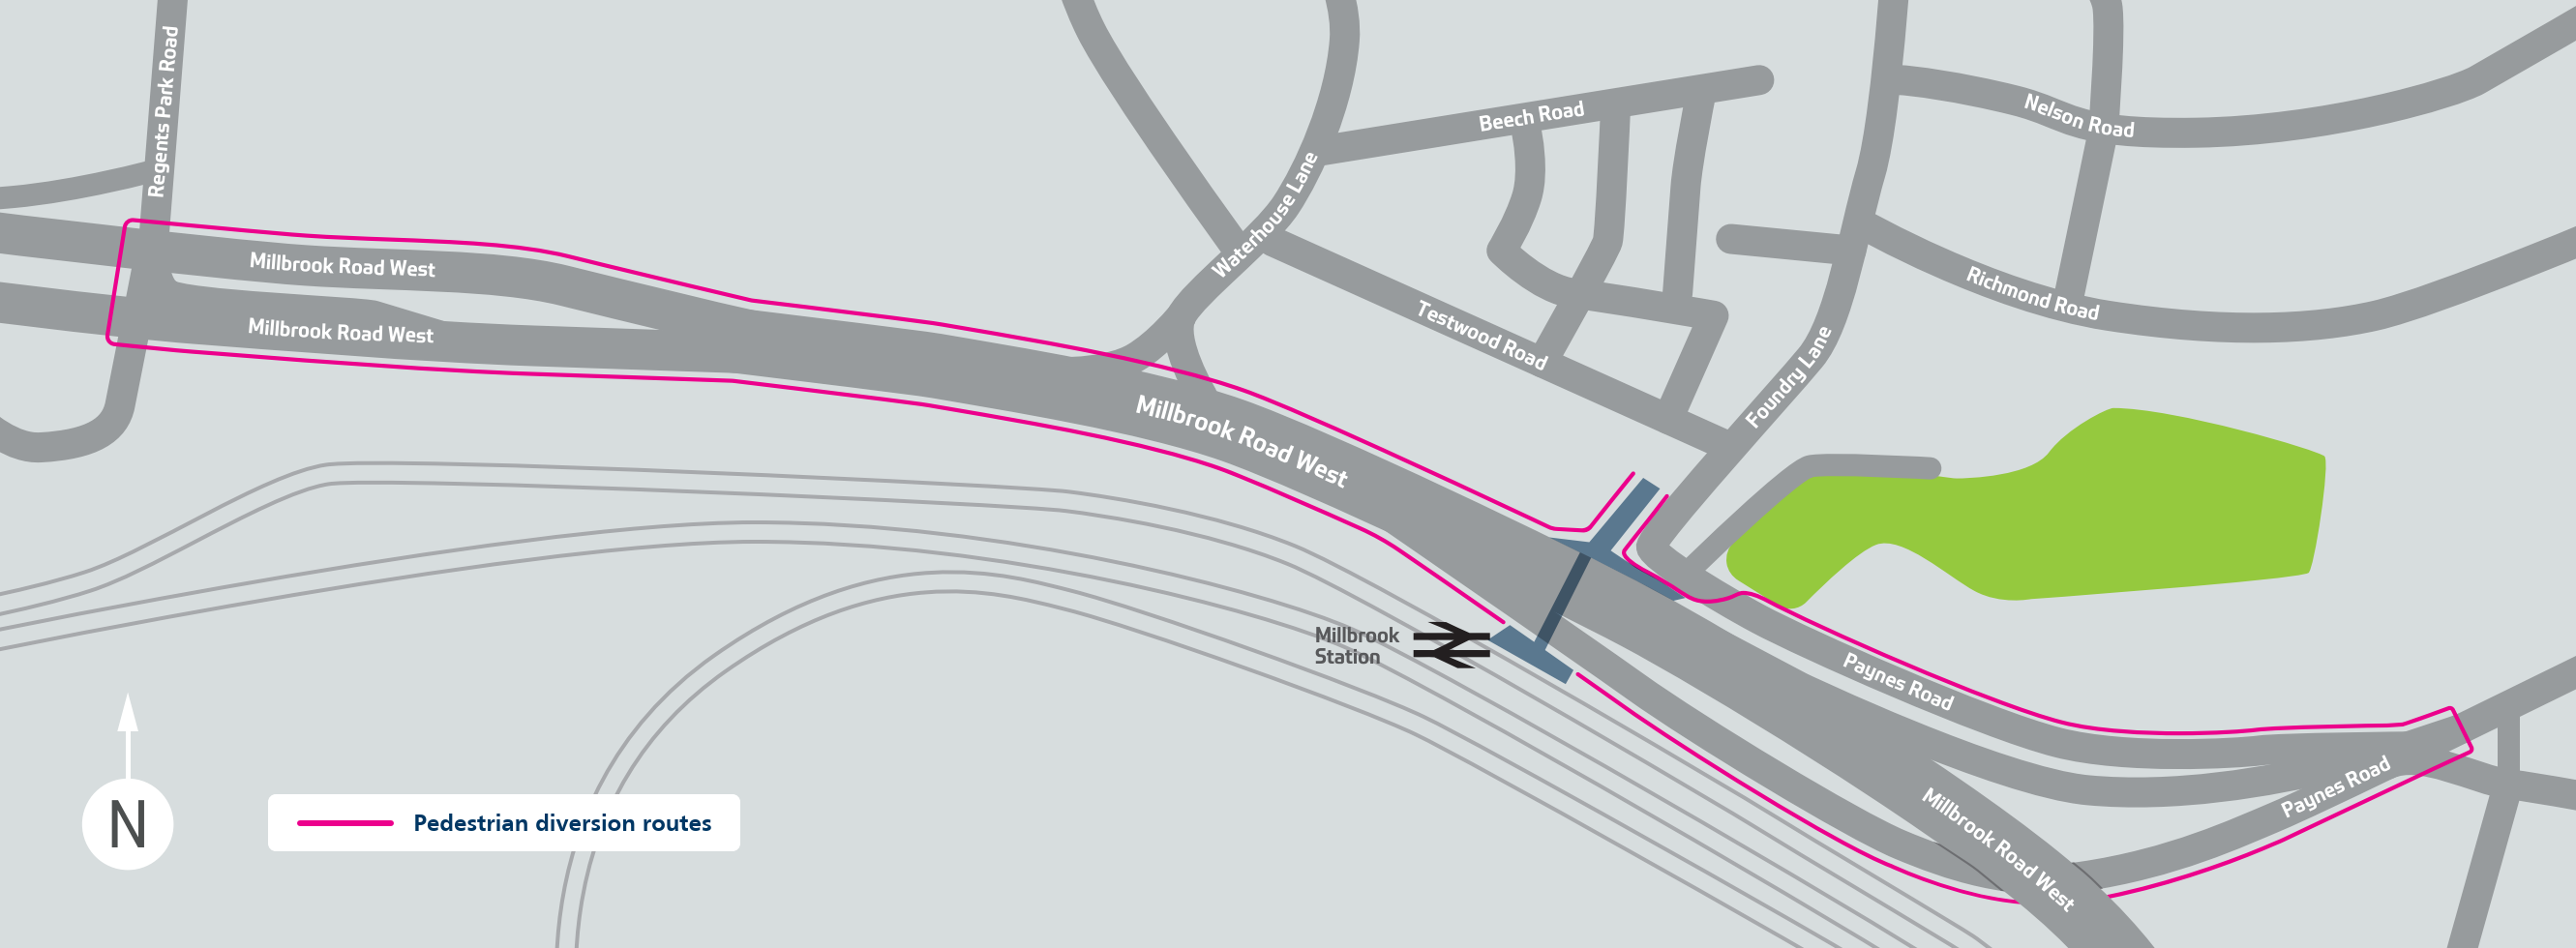 Map showing pedestrian diversion routes via Regents Park Road junction and Paynes Road.